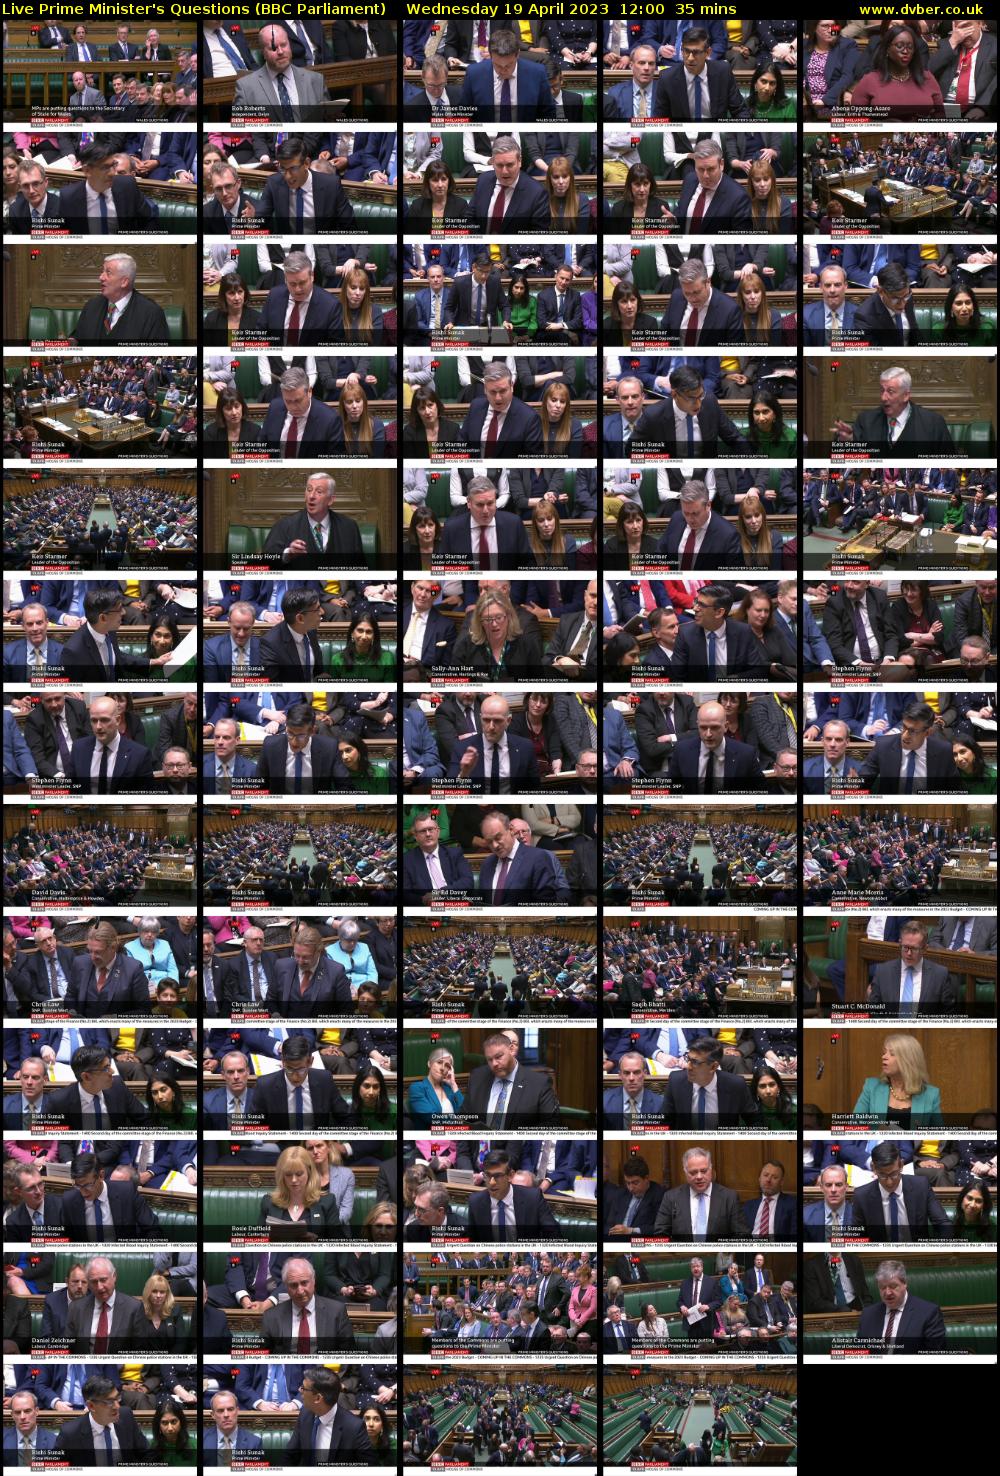 Live Prime Minister's Questions (BBC Parliament) Wednesday 19 April 2023 12:00 - 12:35